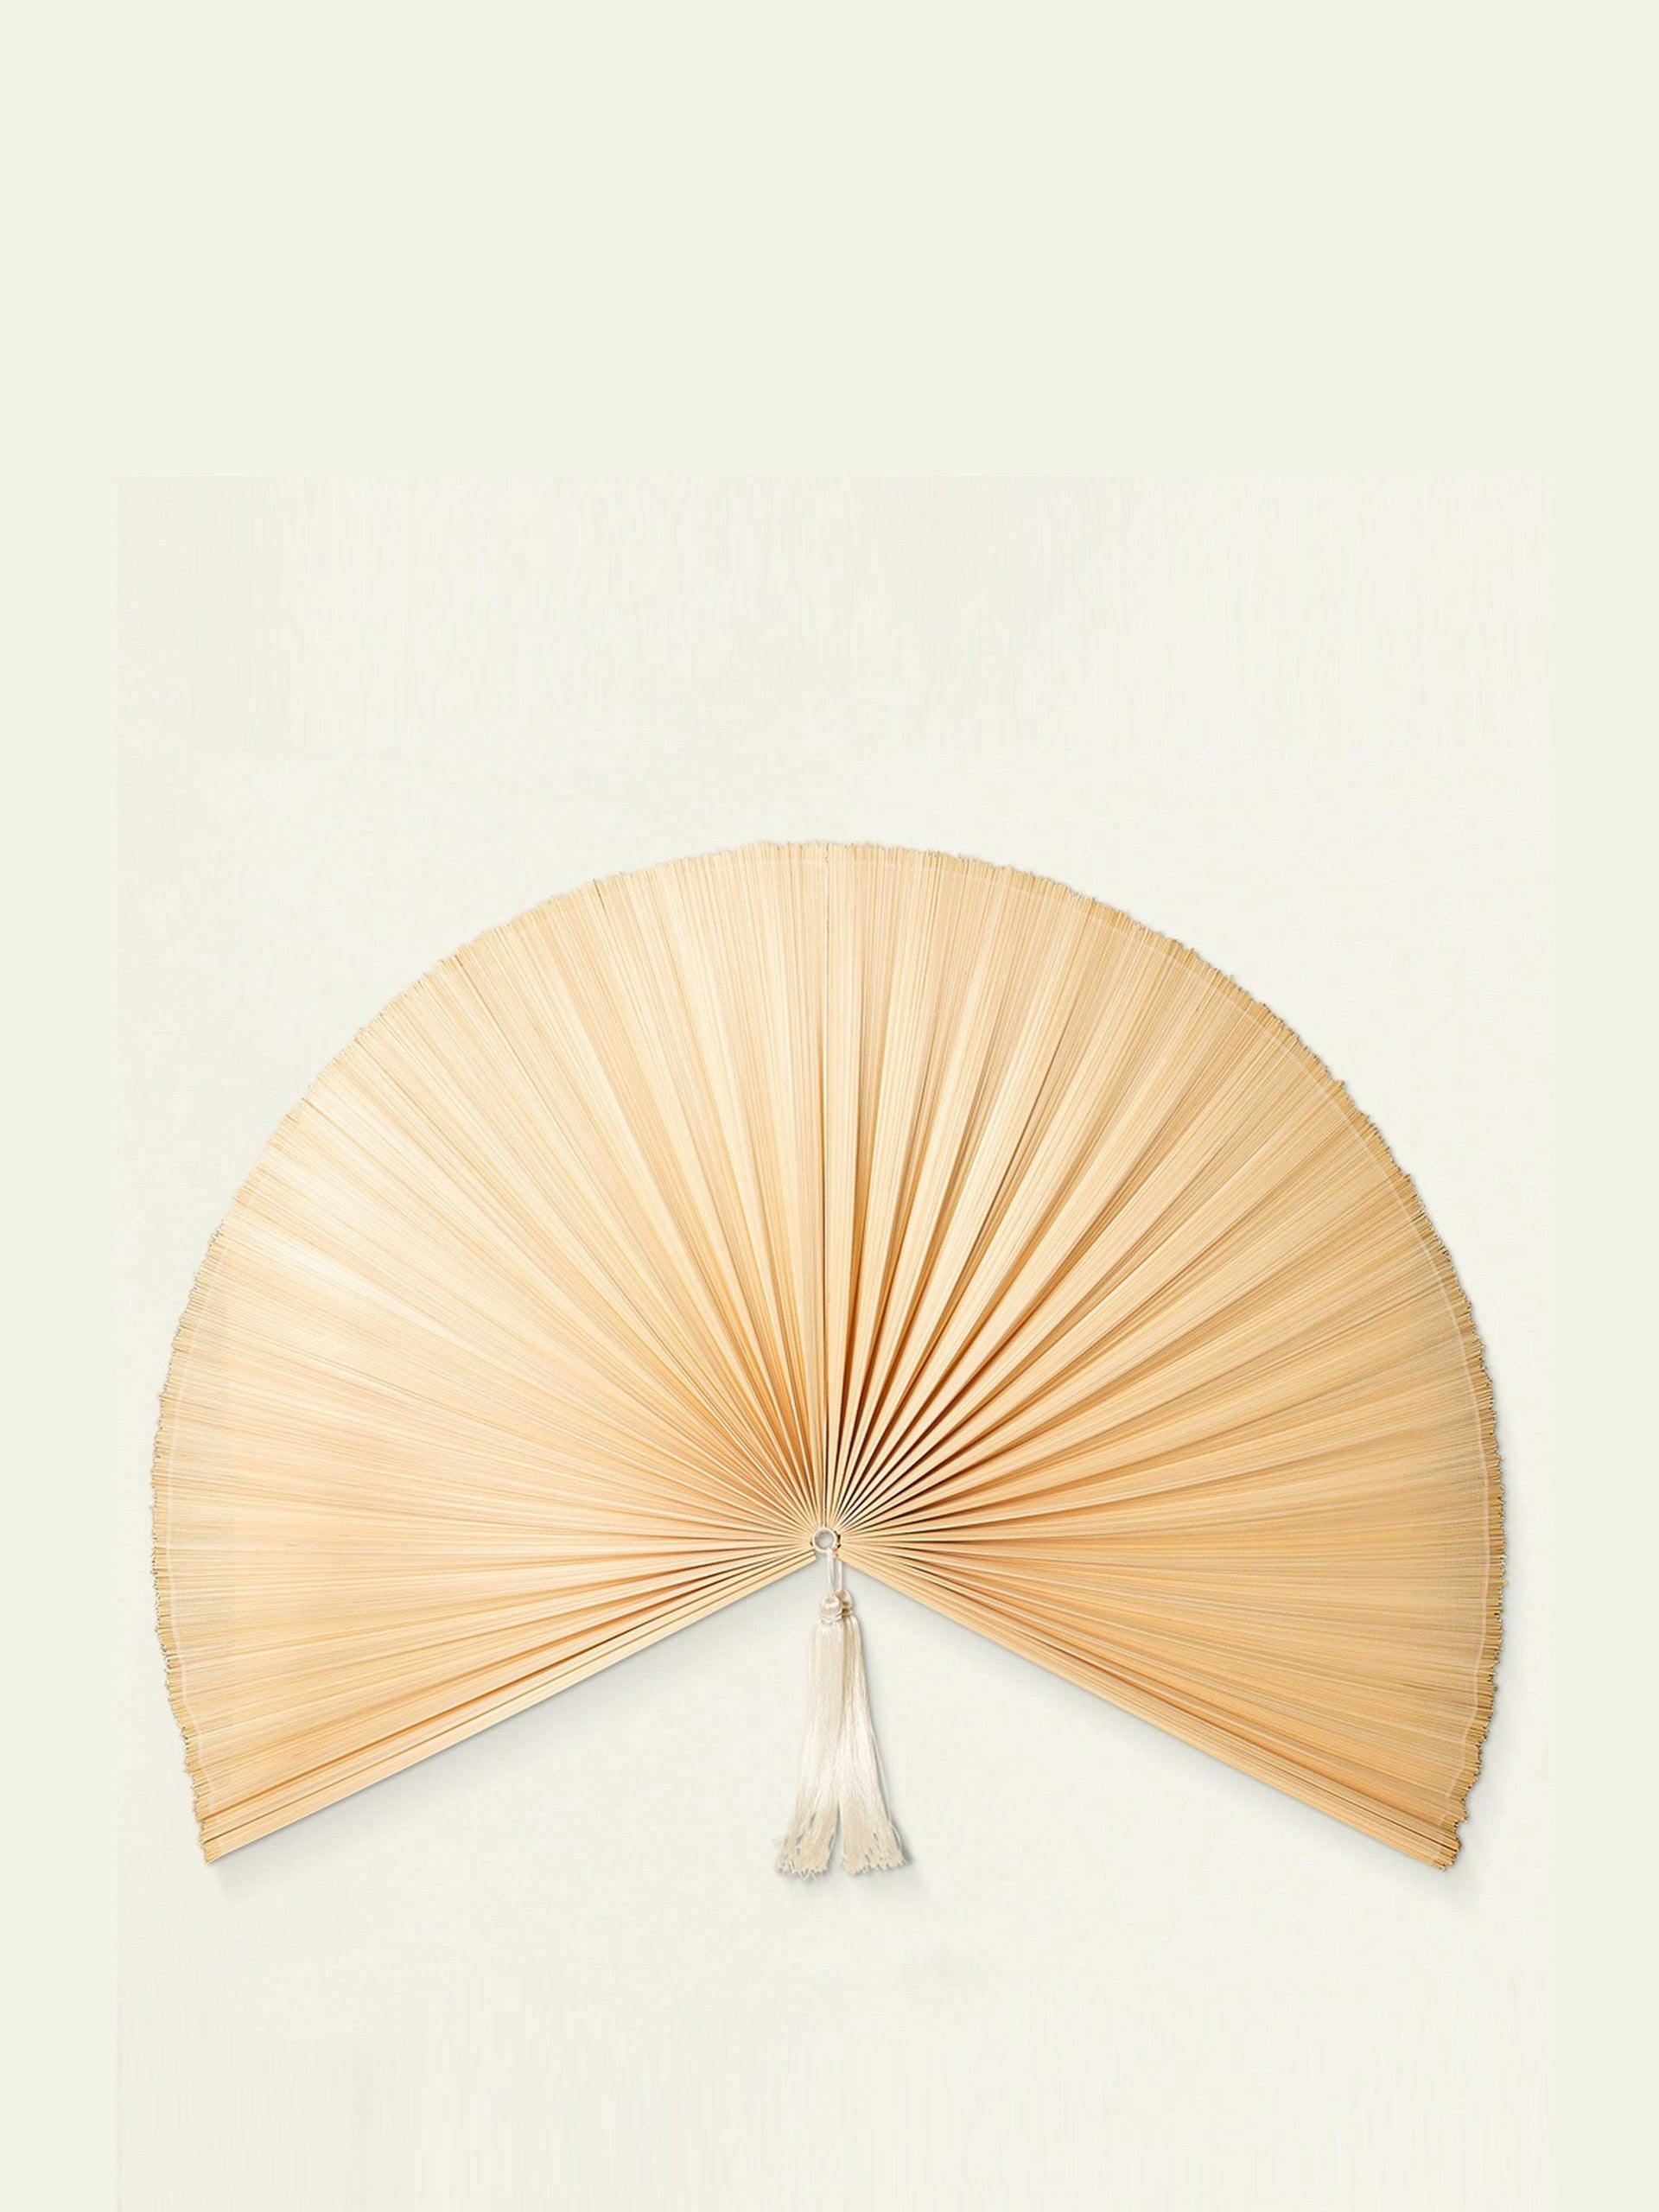 Natural bamboo large fan wall hanging